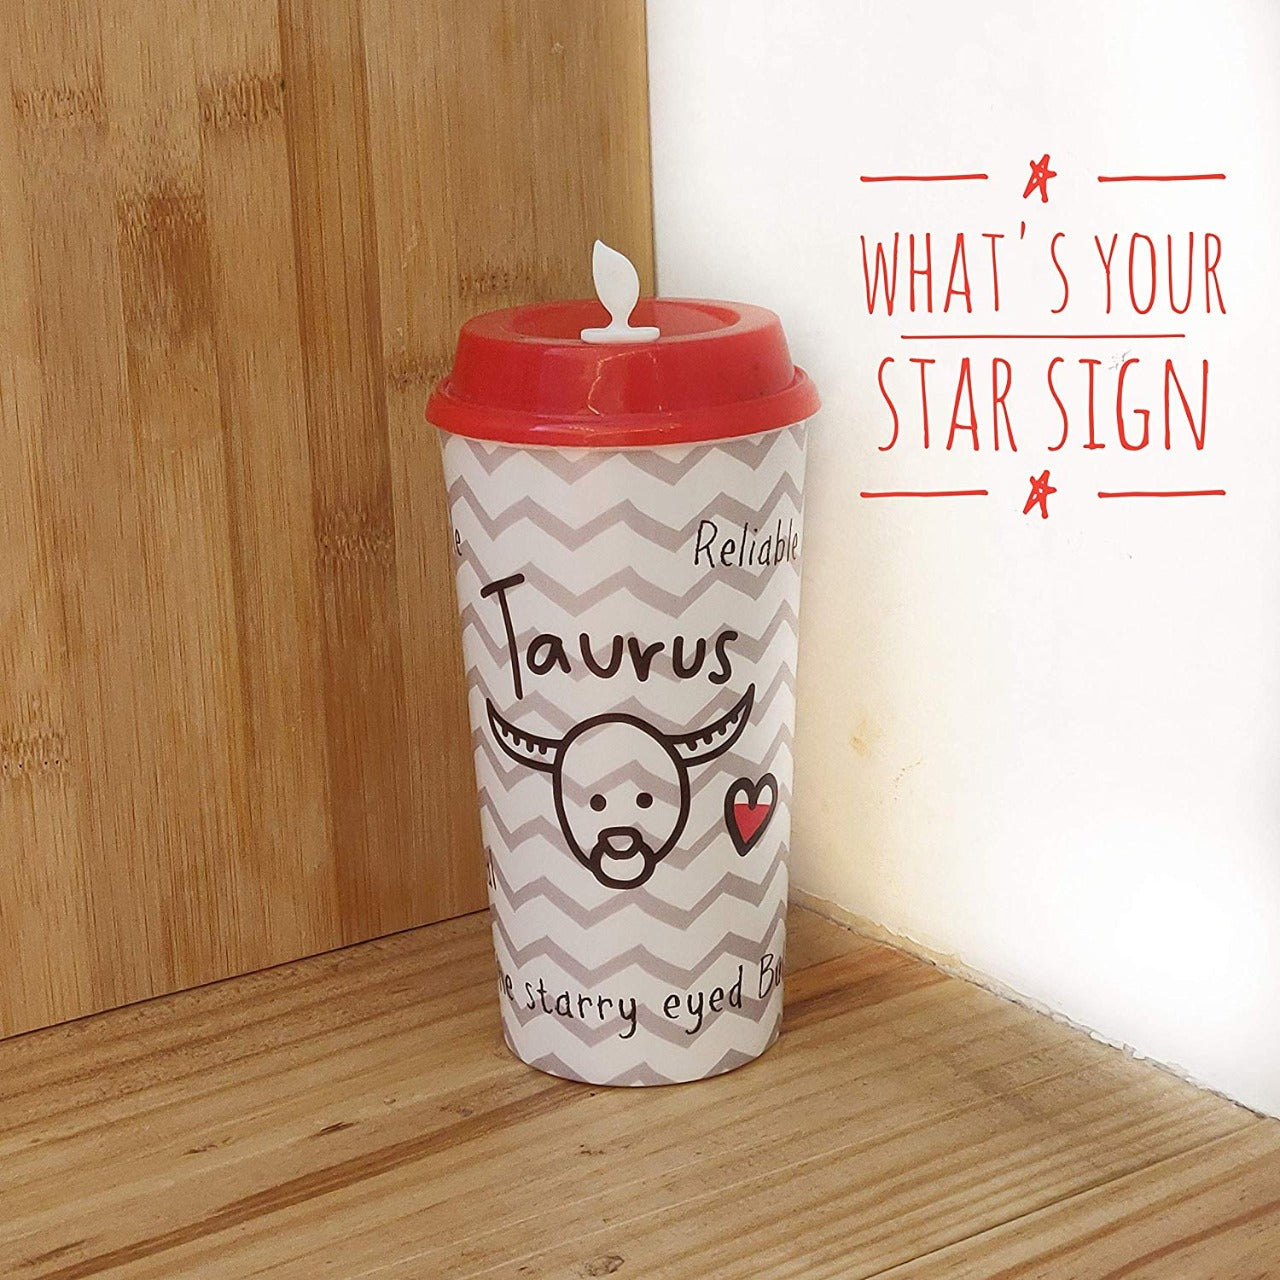 Taurus Sun Sign Sipper & Coffee Cup - Zodiac Cups